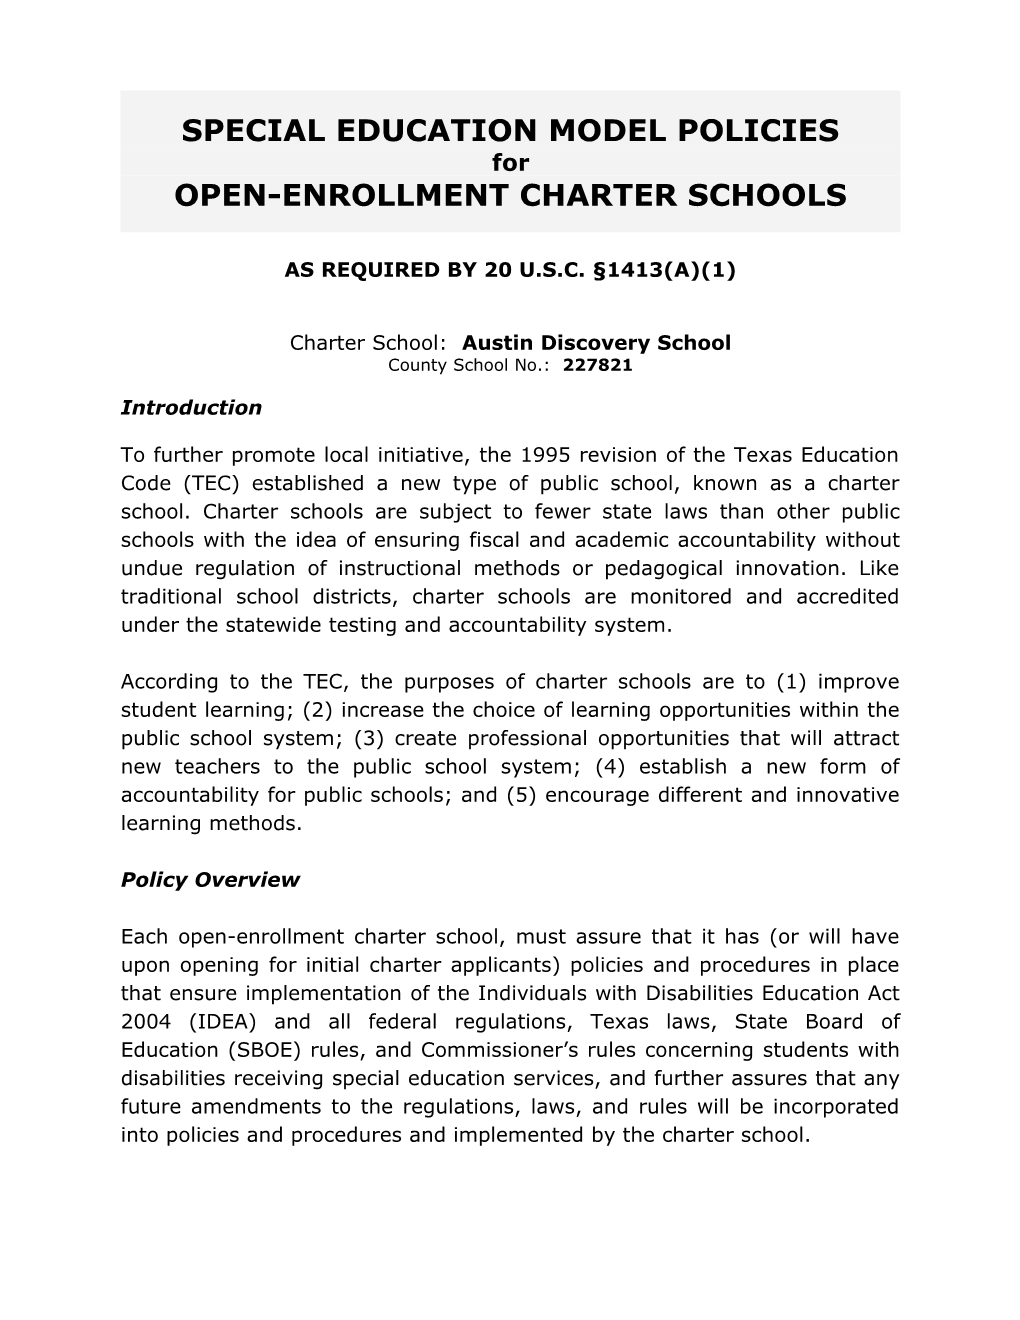 Model Policies for Open-Enrollment Charter Schools s2